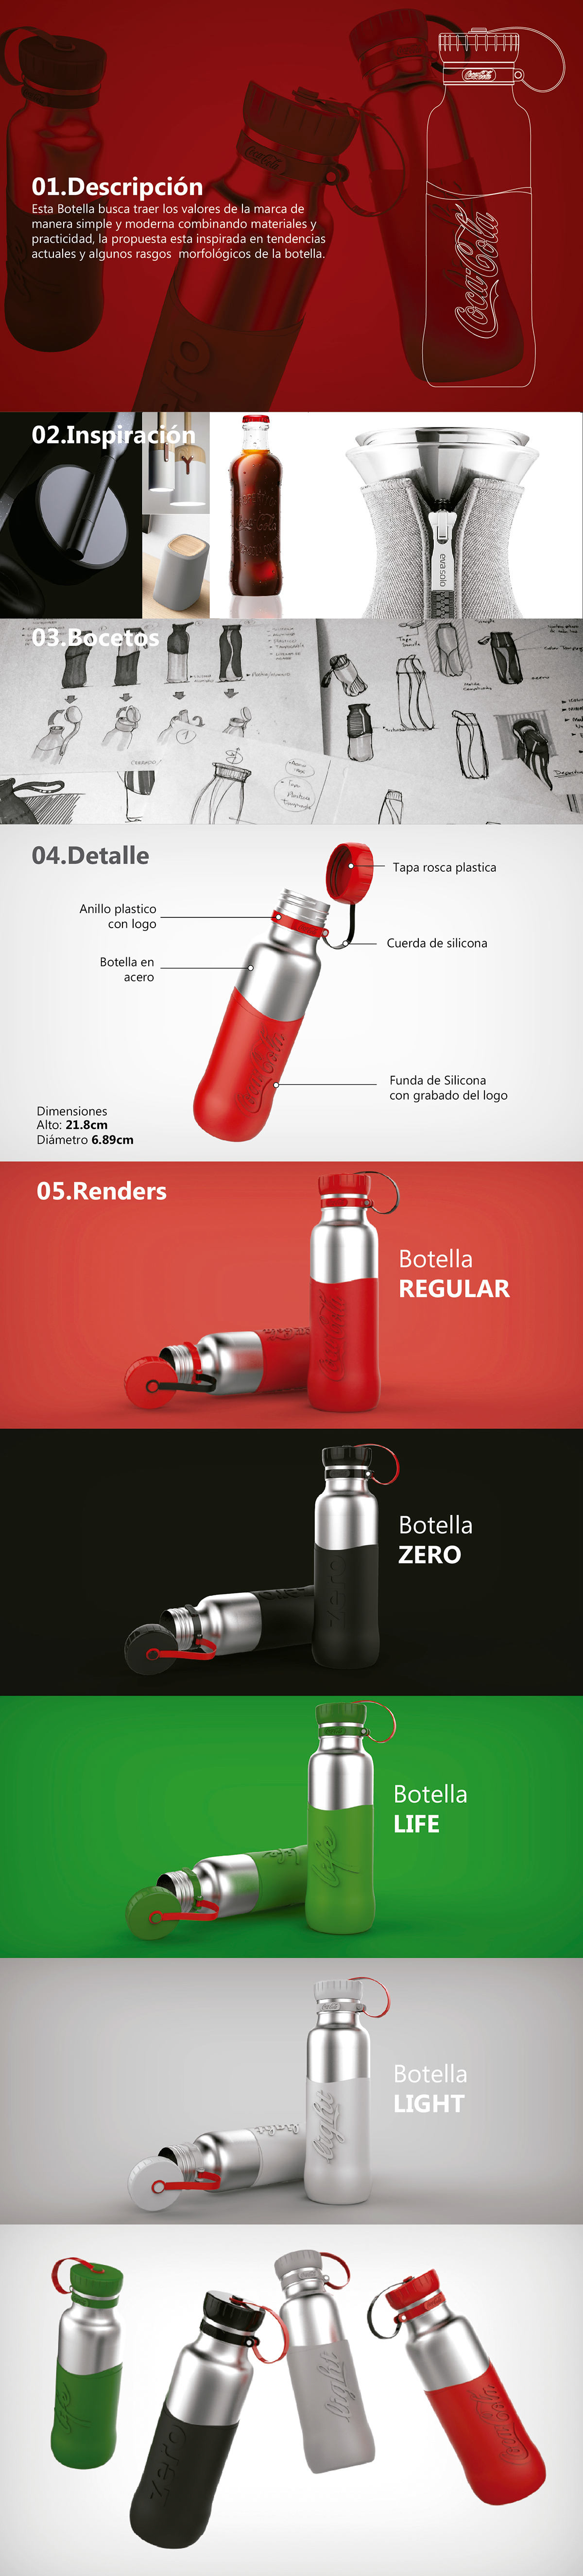 Packaging industrial design  bottle design3D Rhino sport